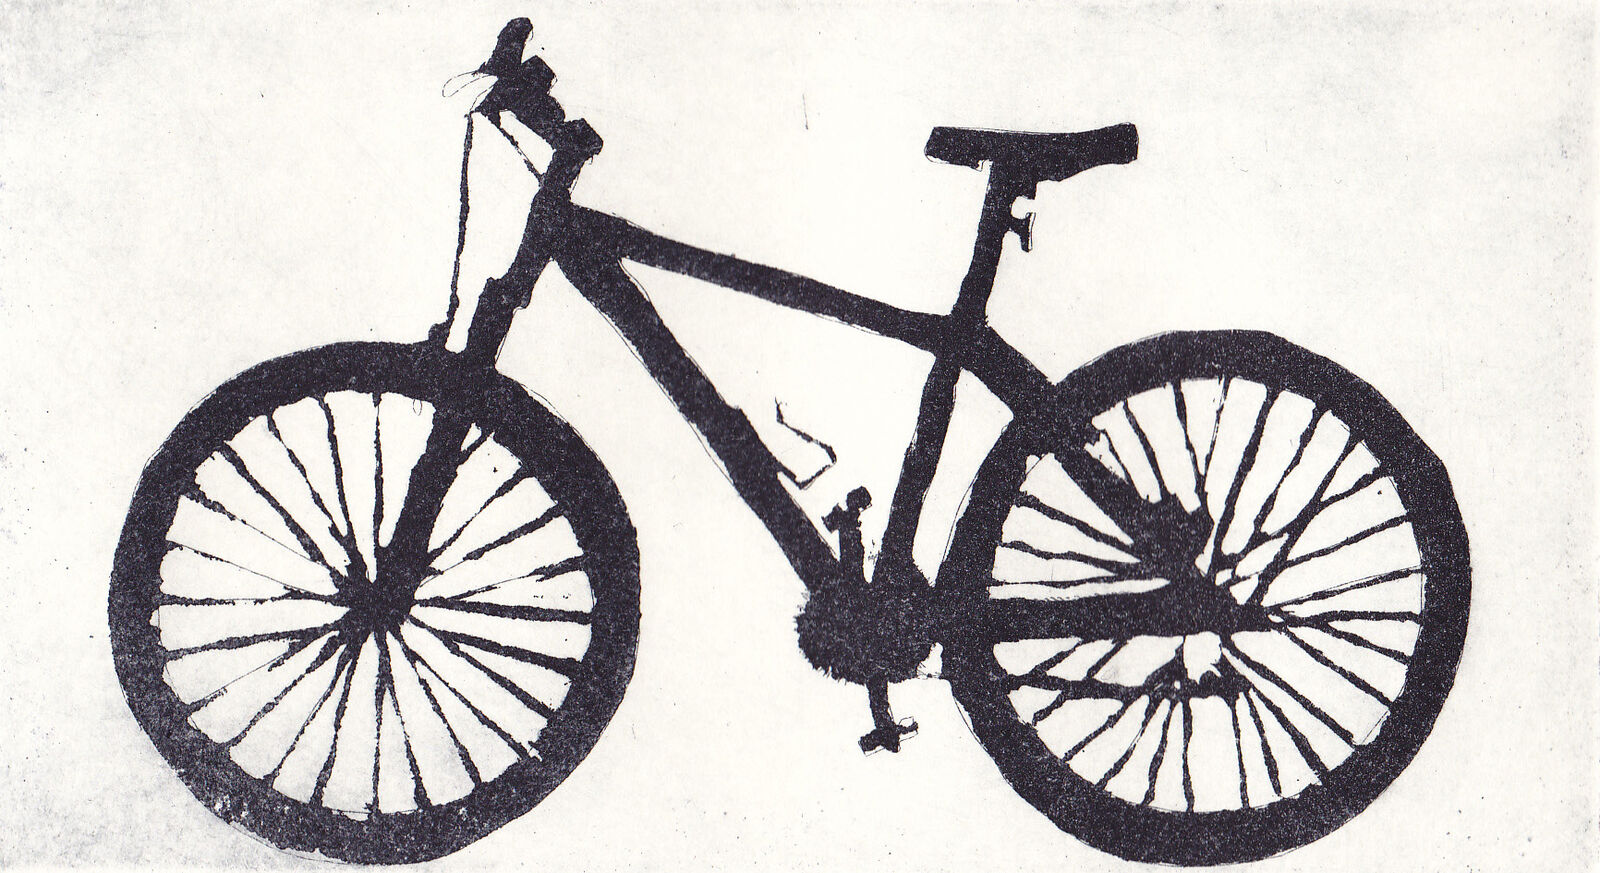 Fahrrad, Aquatinta-Radierung, 27 x 20 cm, 2014 © Agnes Christine Katschner